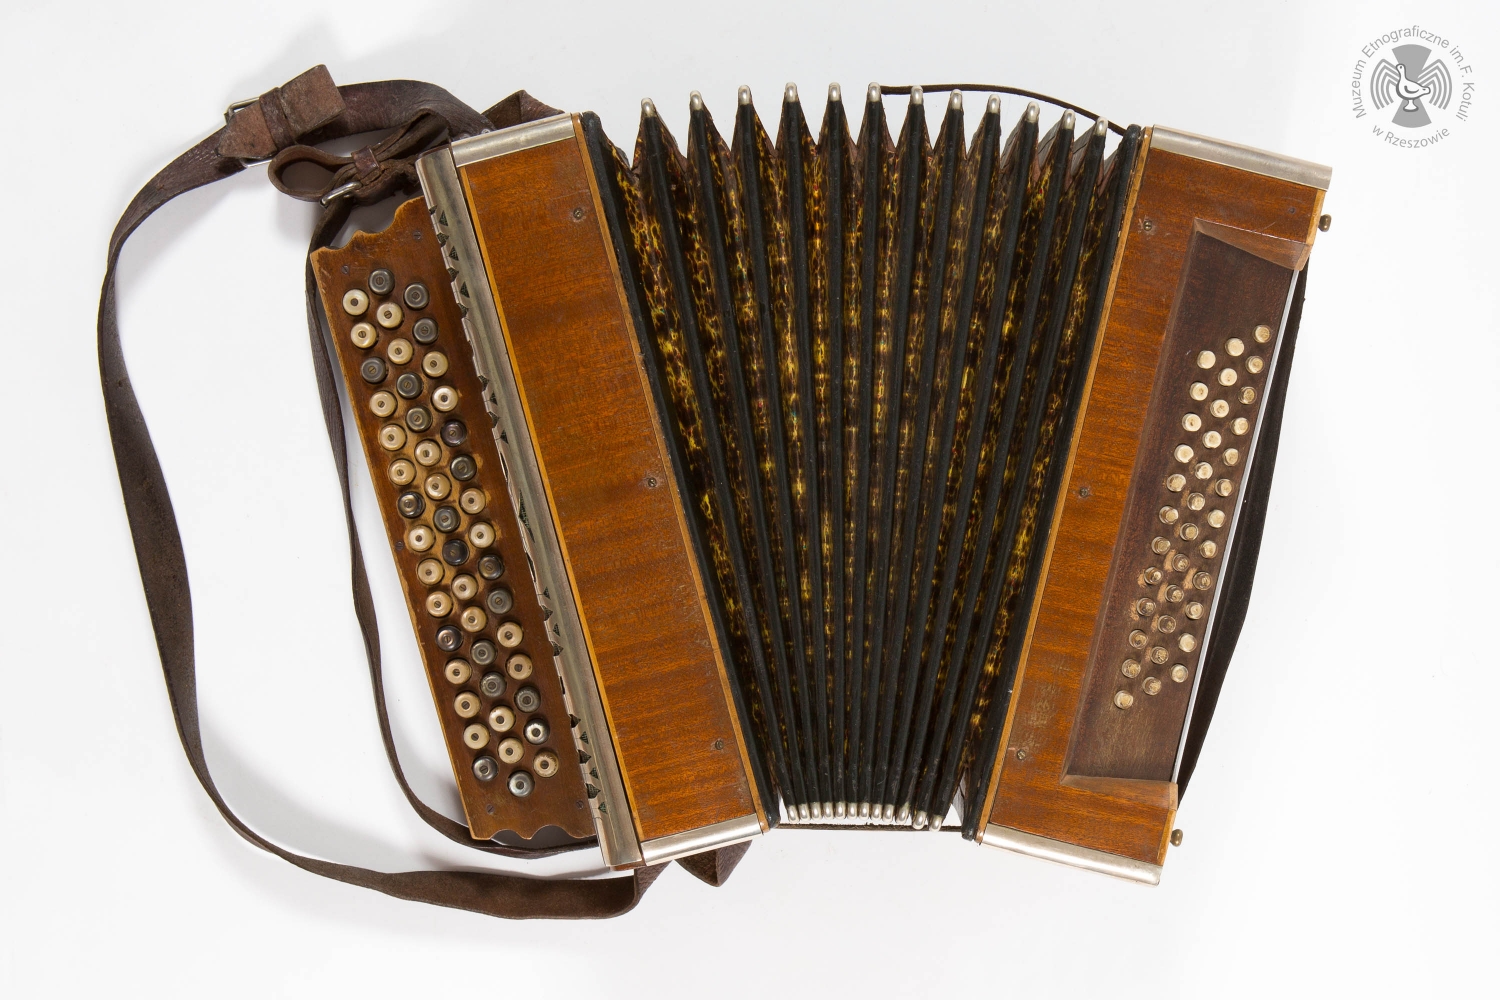 Polish folk musical instruments